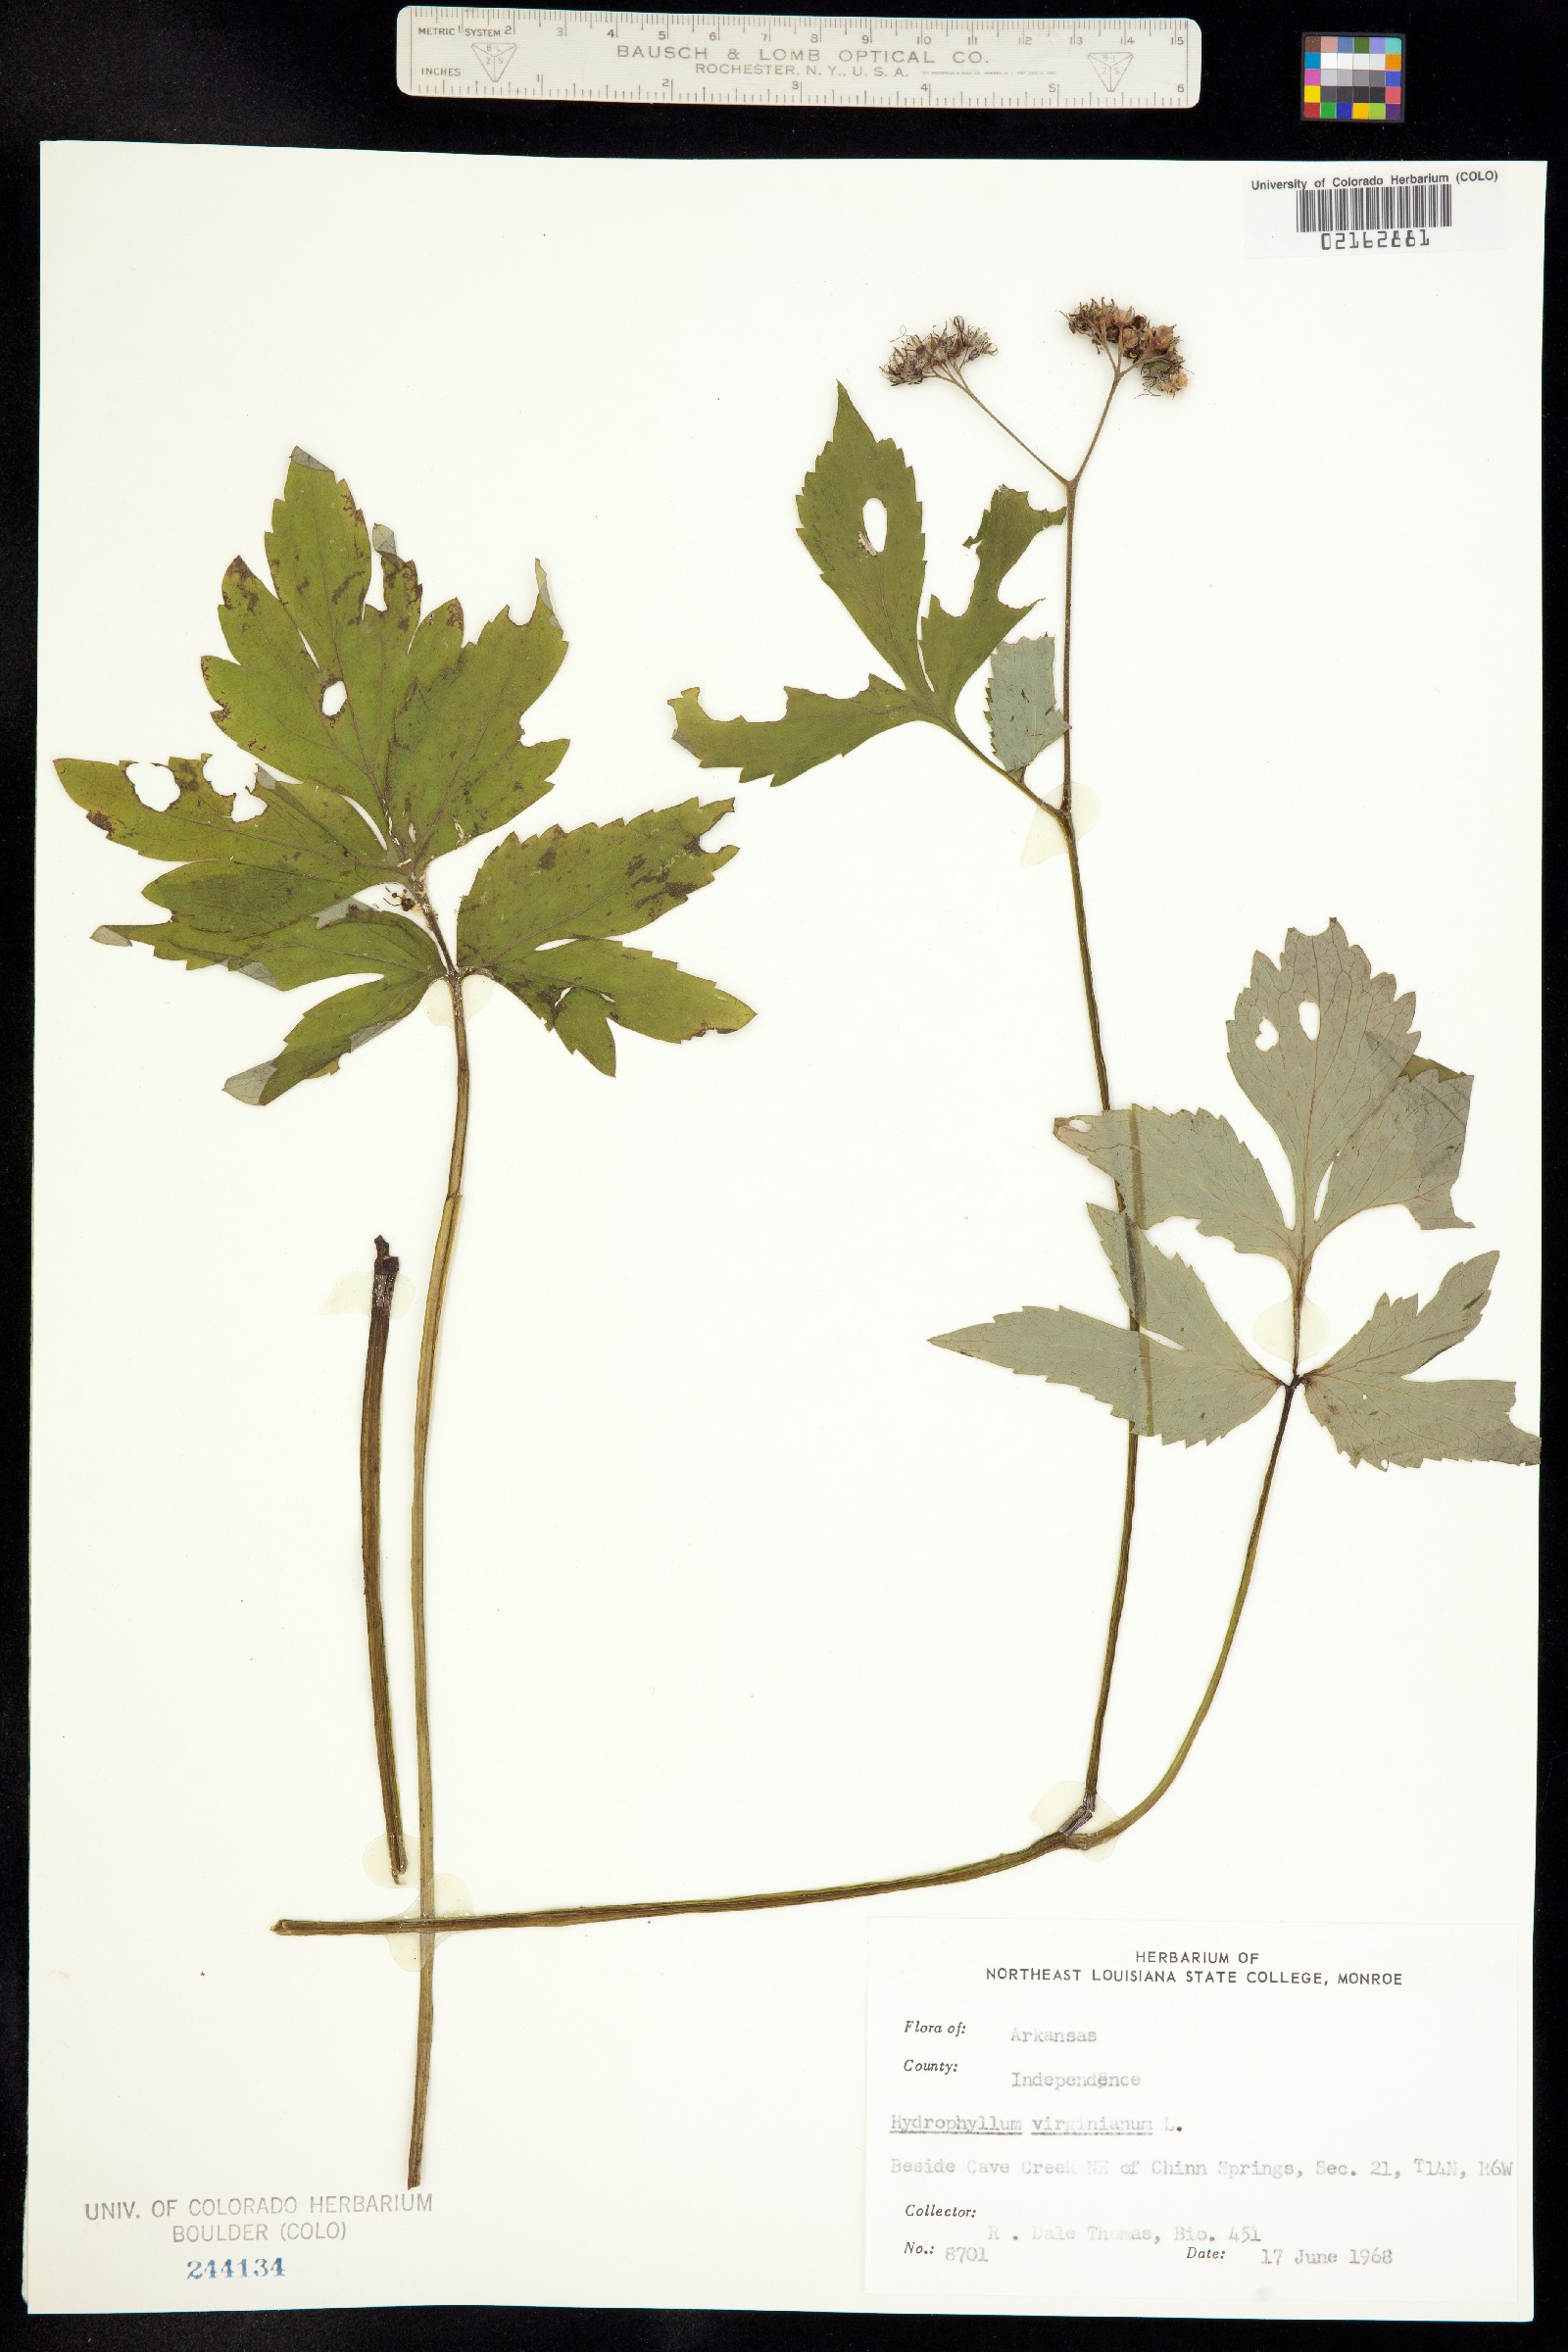 Hydrophyllum image